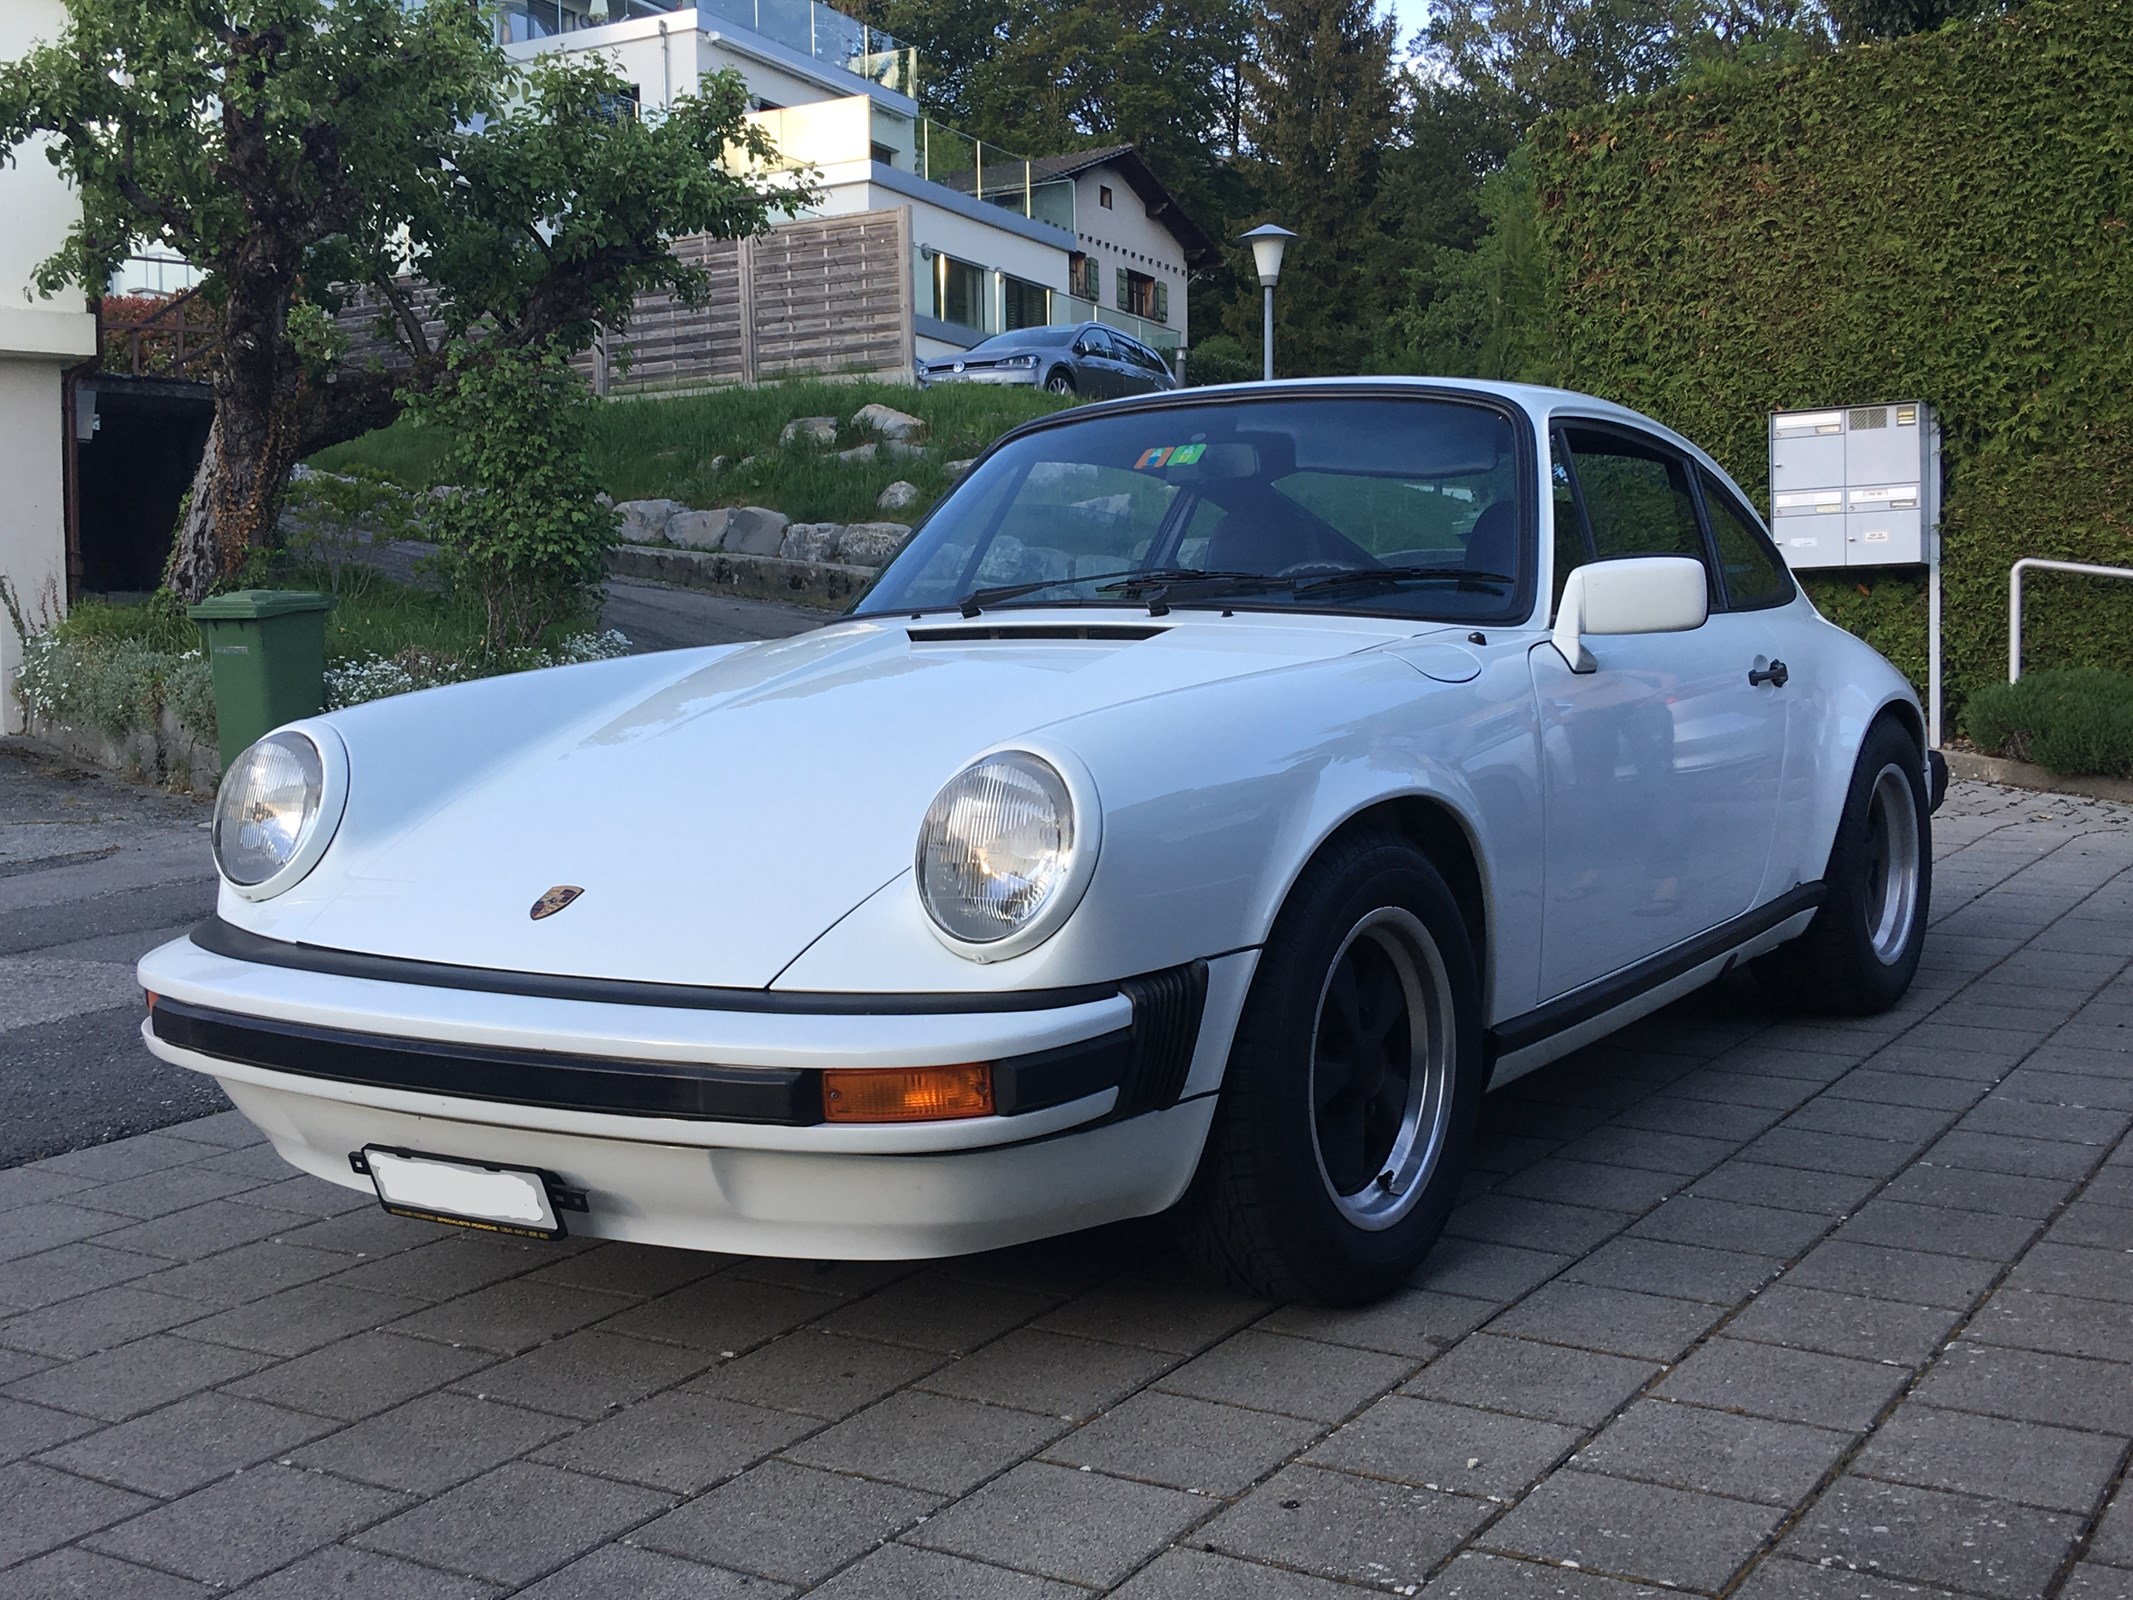 PORSCHE 911 3.0 SC (Porsche Certified + Full History Documents)